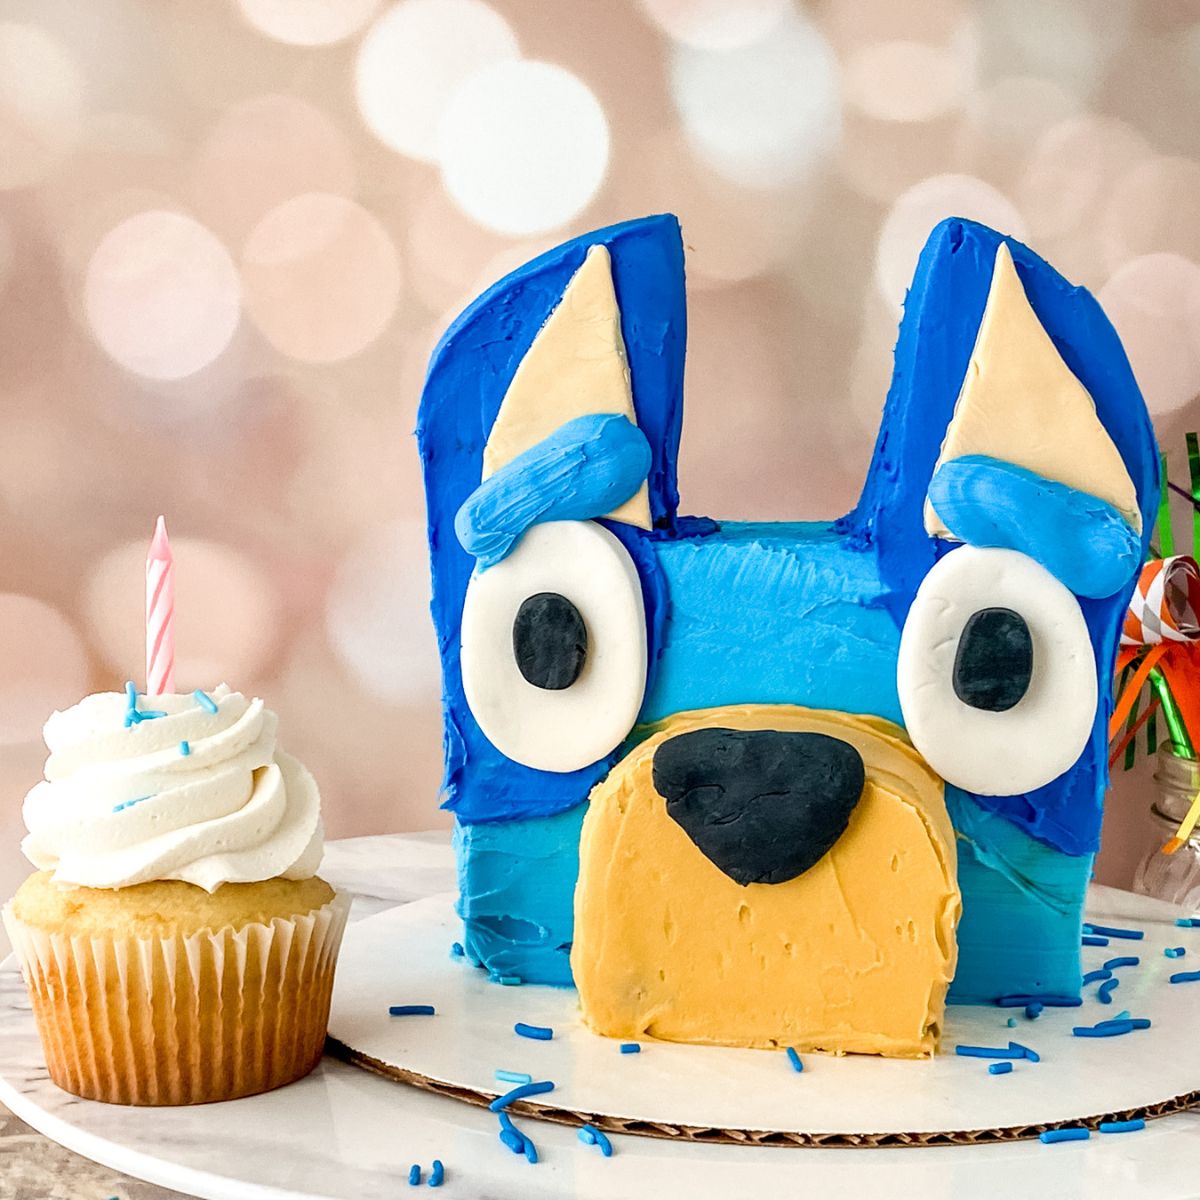 A cupcake and Bluey Cake.